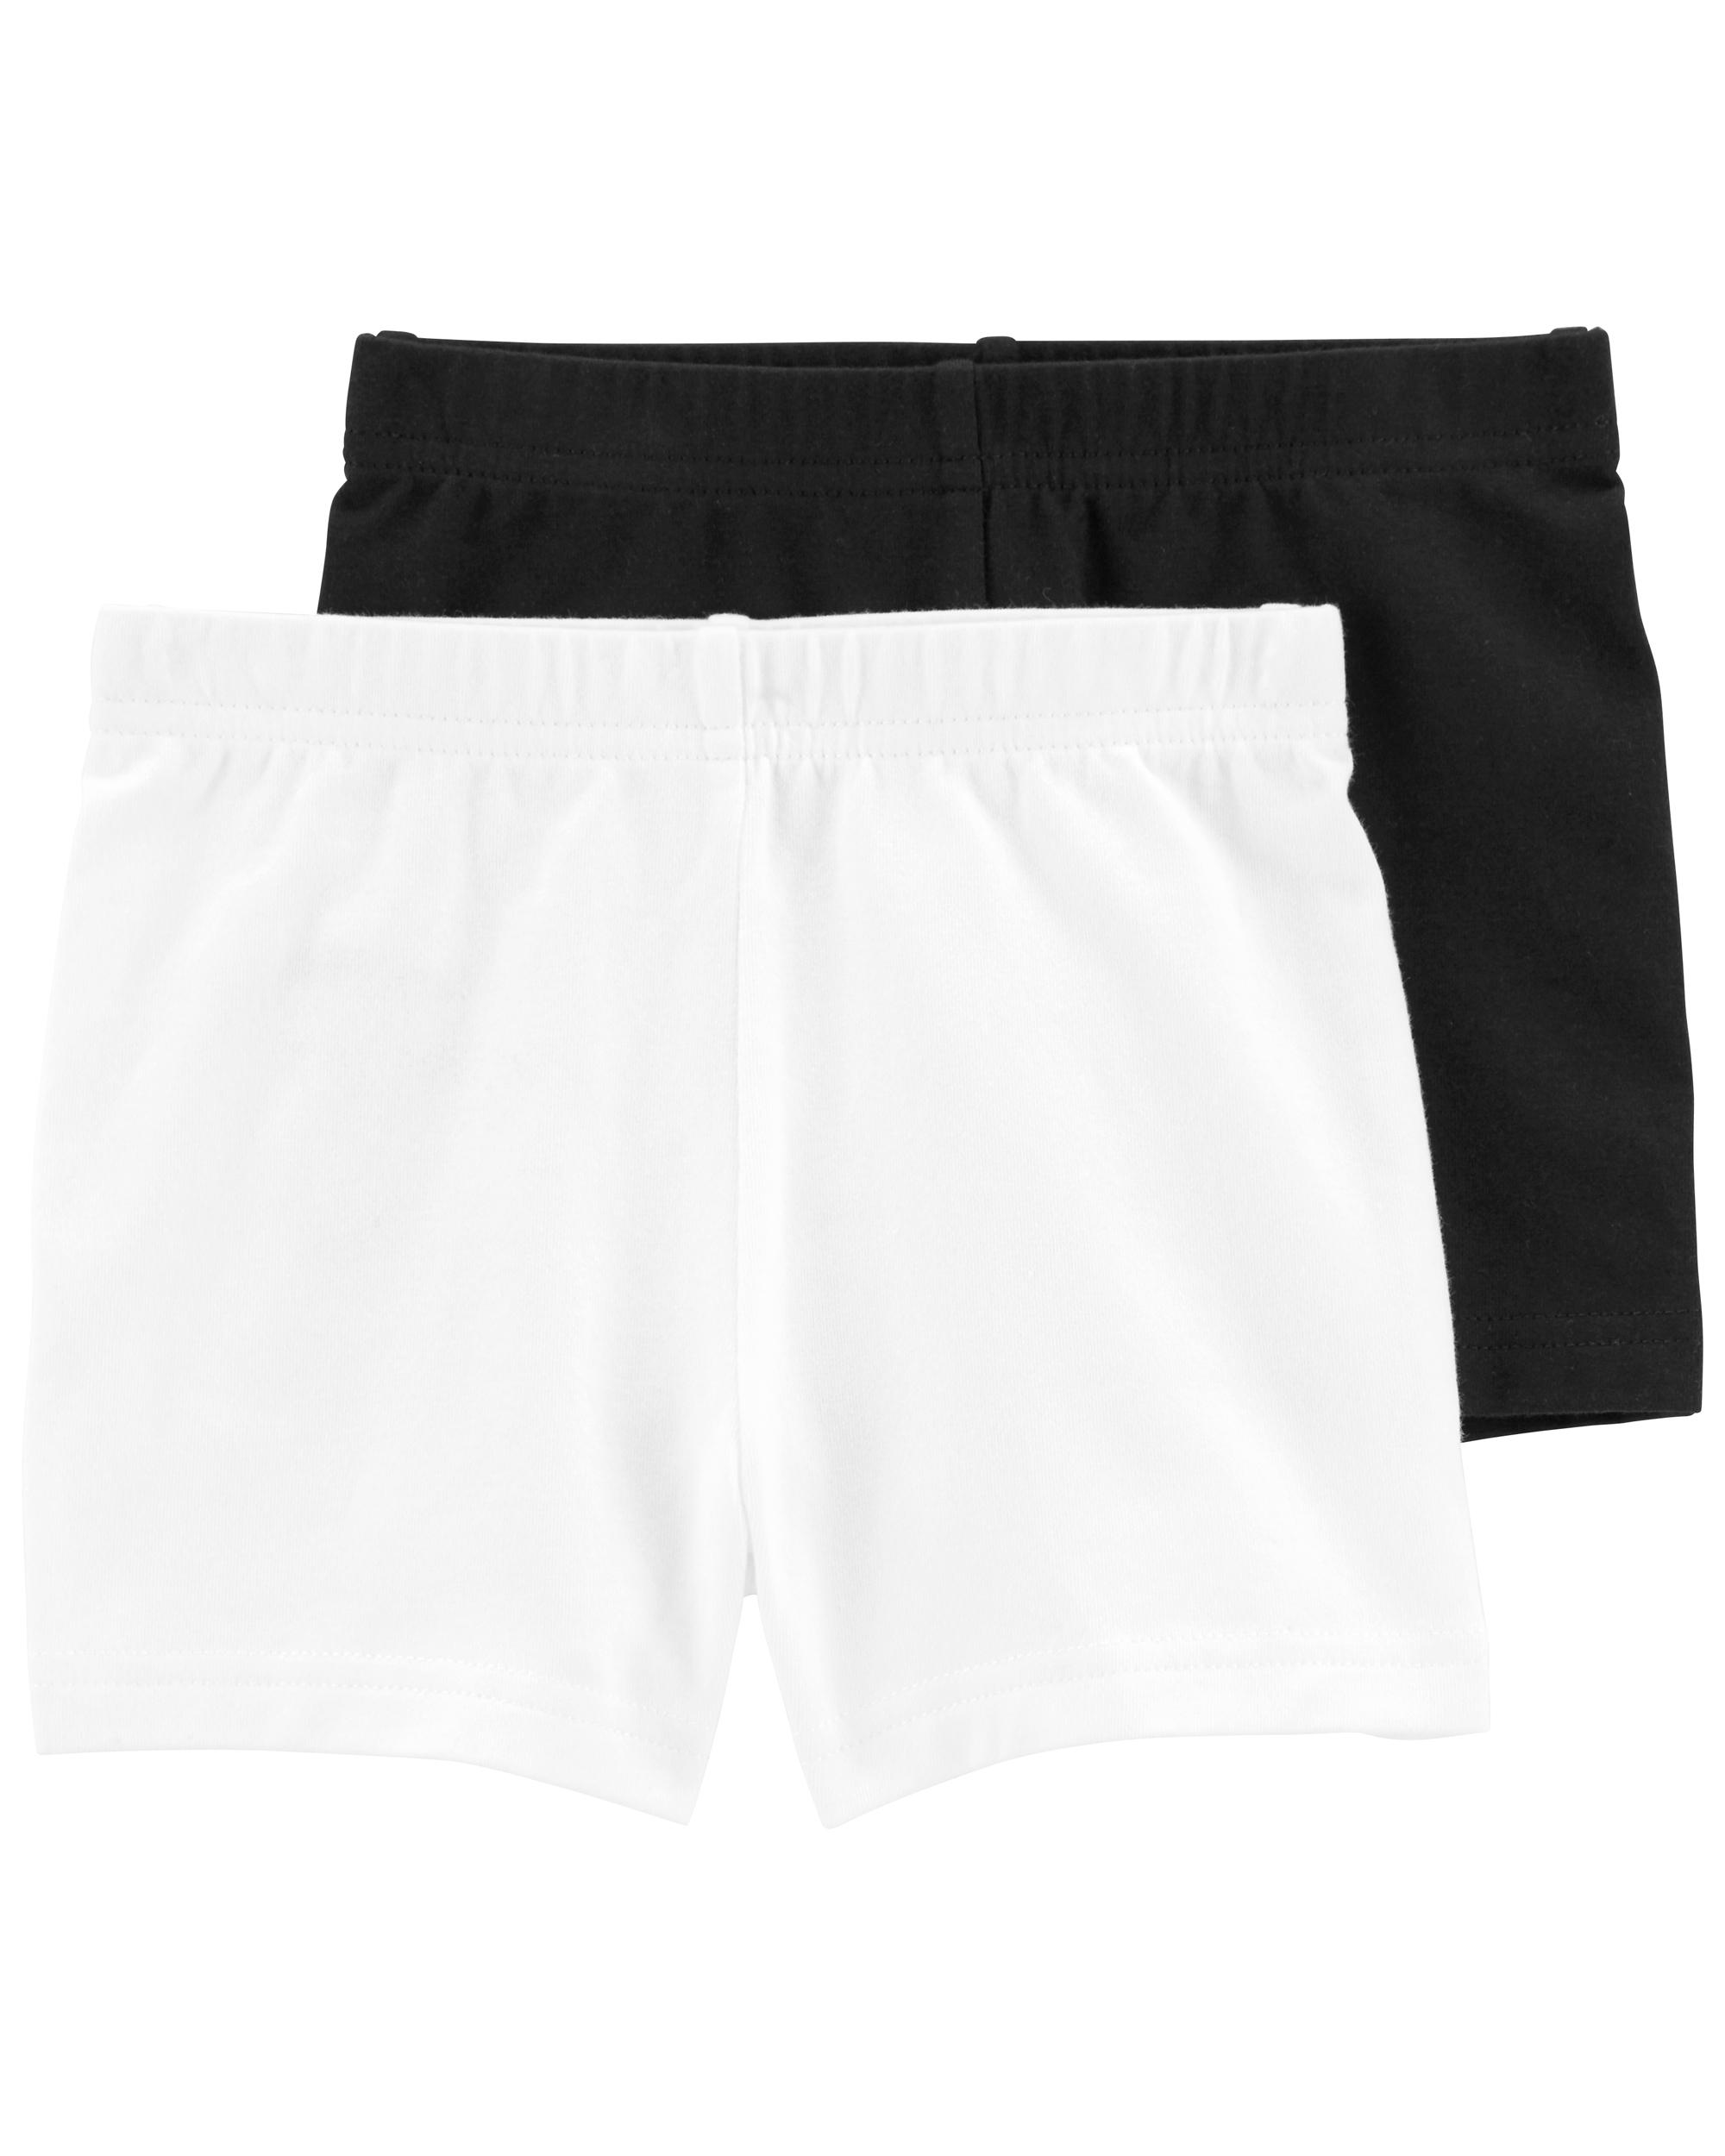 Toddler 2-Pack Black/White Bike Shorts